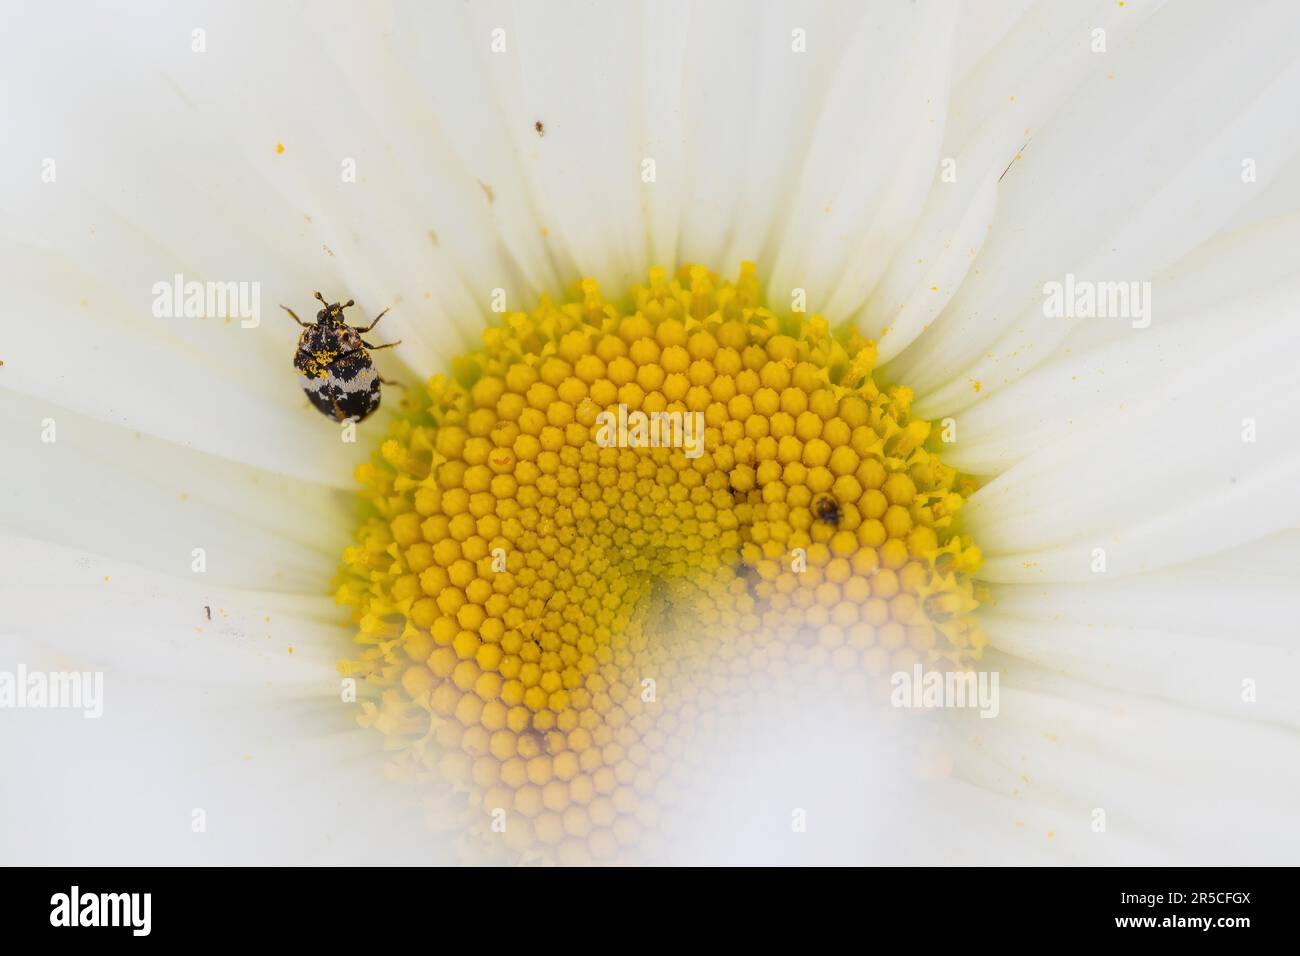 Beaver flower beetle (Anthrenus pimpinellae) on daisy flower, Hesse, Germany Stock Photo